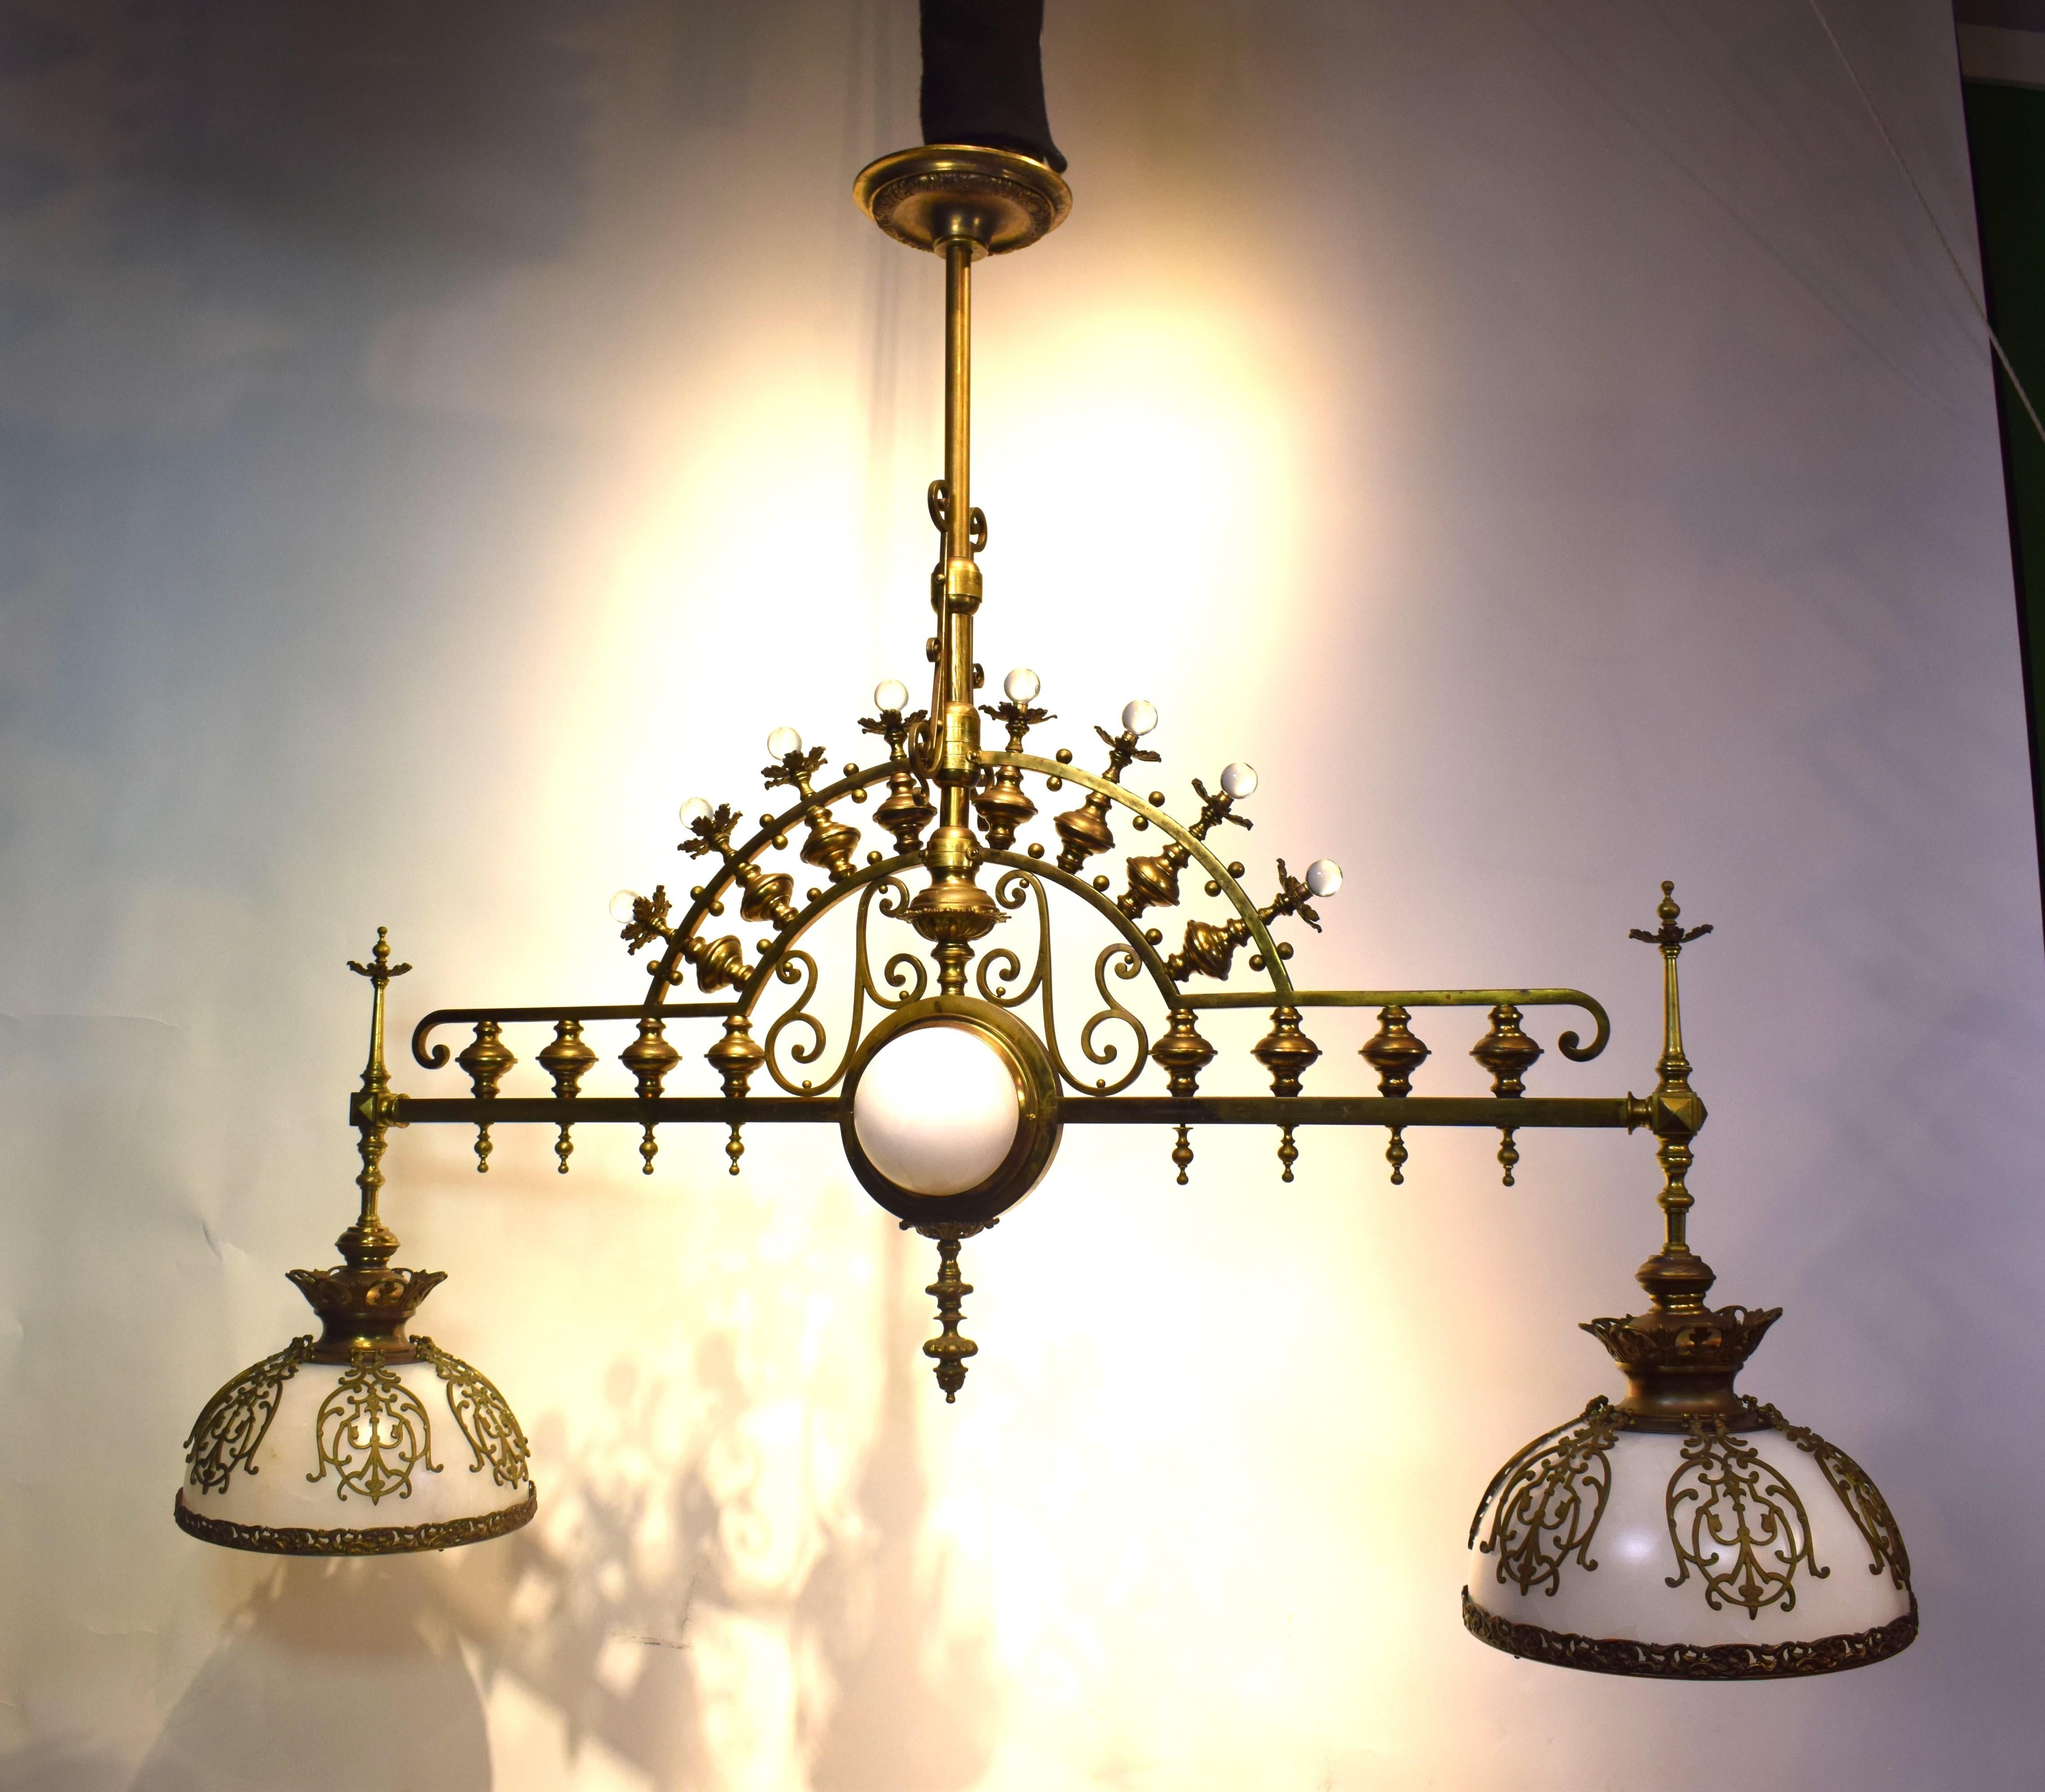 A Truly Exeptional Gilt Bronze, Alabaster & Cut Crystal Billiard Light Chandelier. France, circa 1900
Dimensions: Height 53